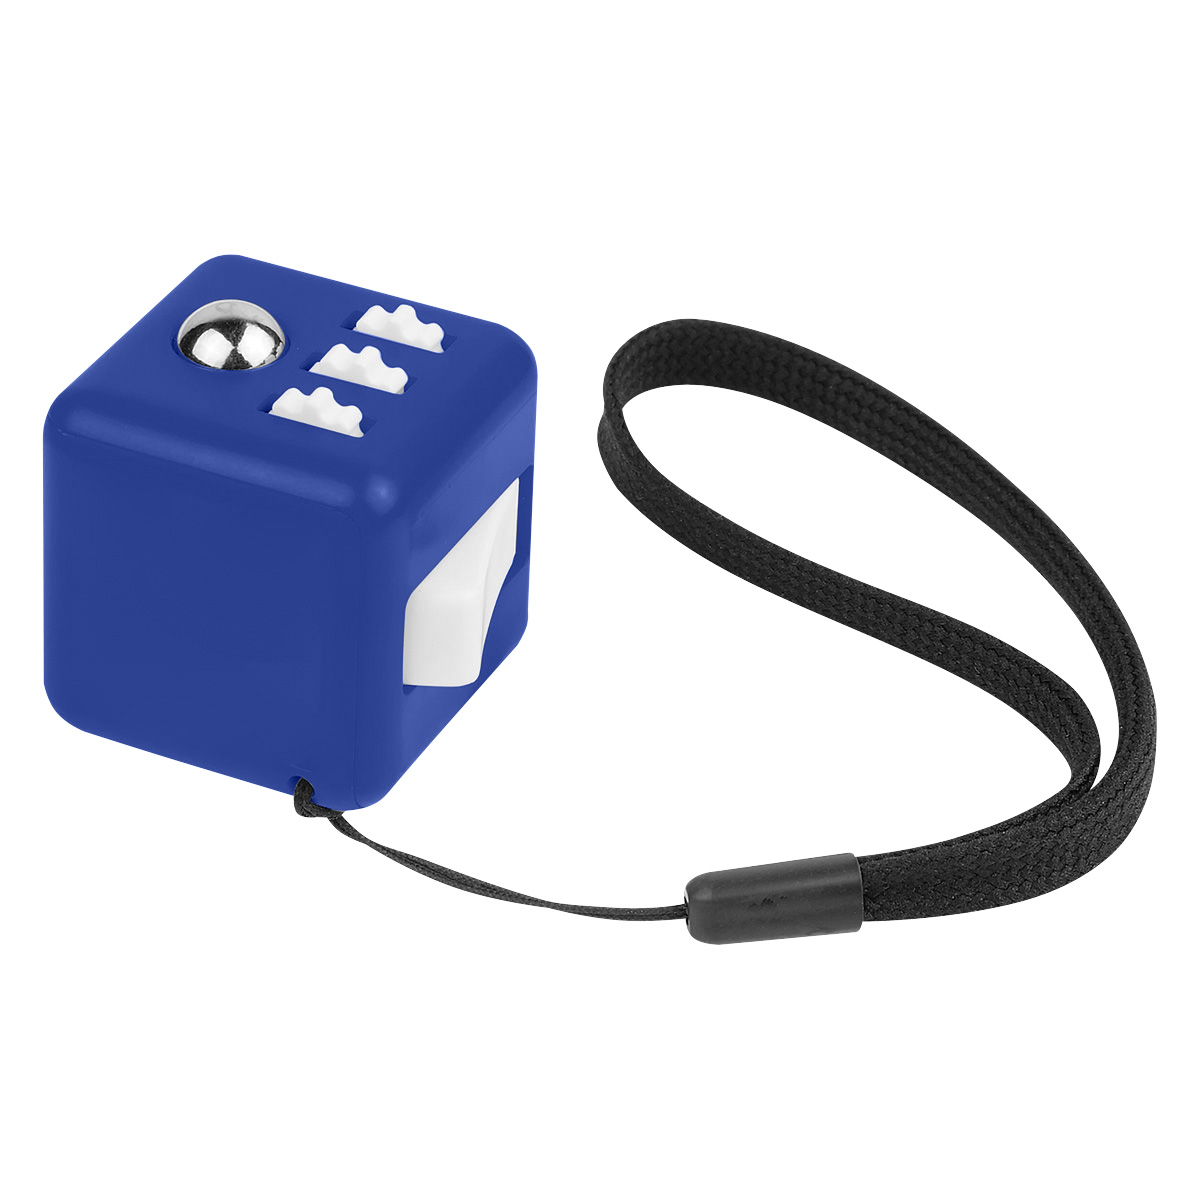 Blue w/ White Accents Fun Cube